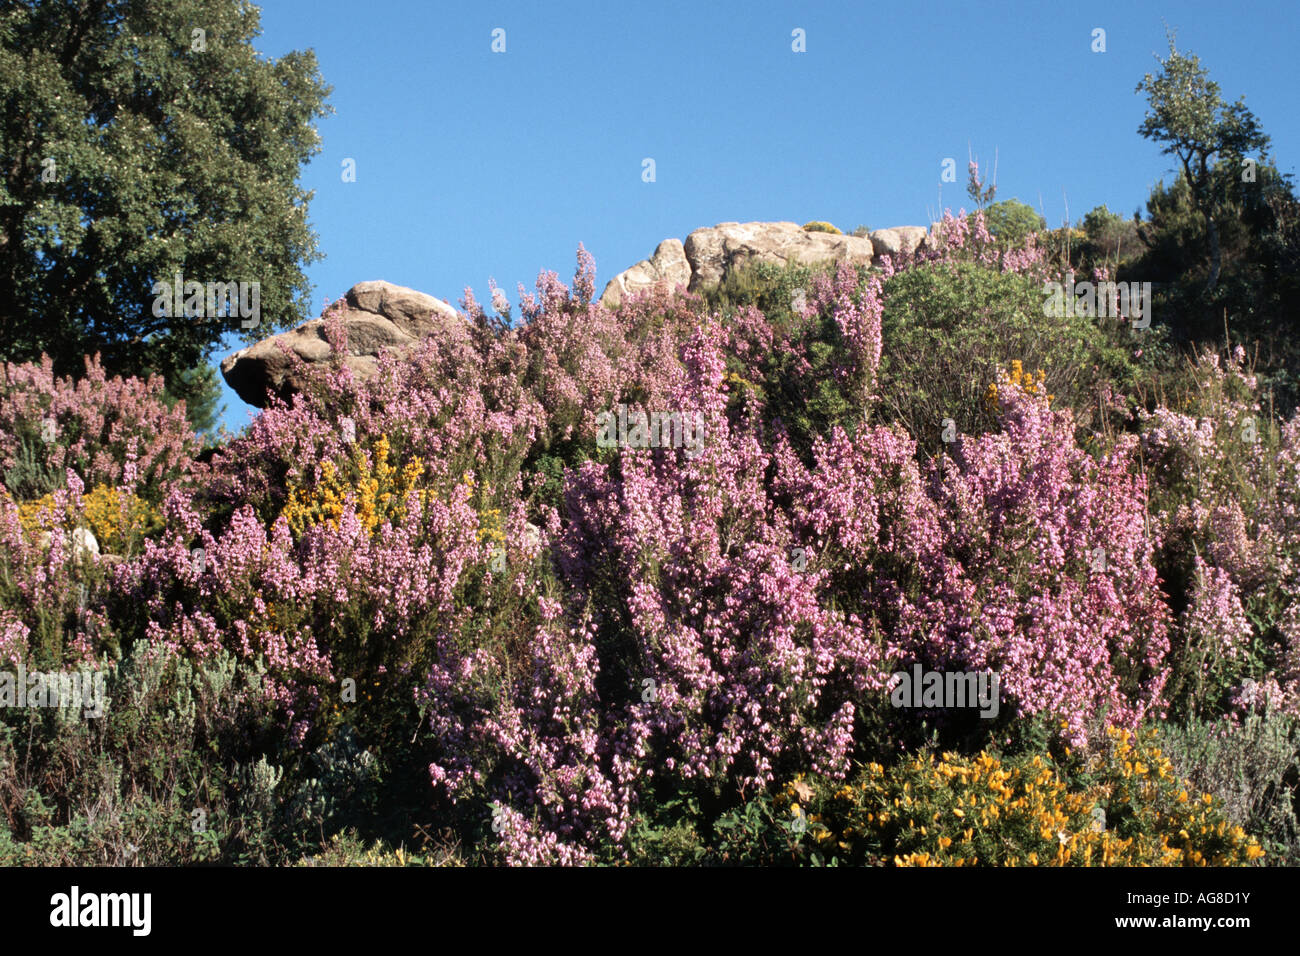 Spanish heath (Erica australis), blooming shrubs, Spain, Andalusia Stock Photo